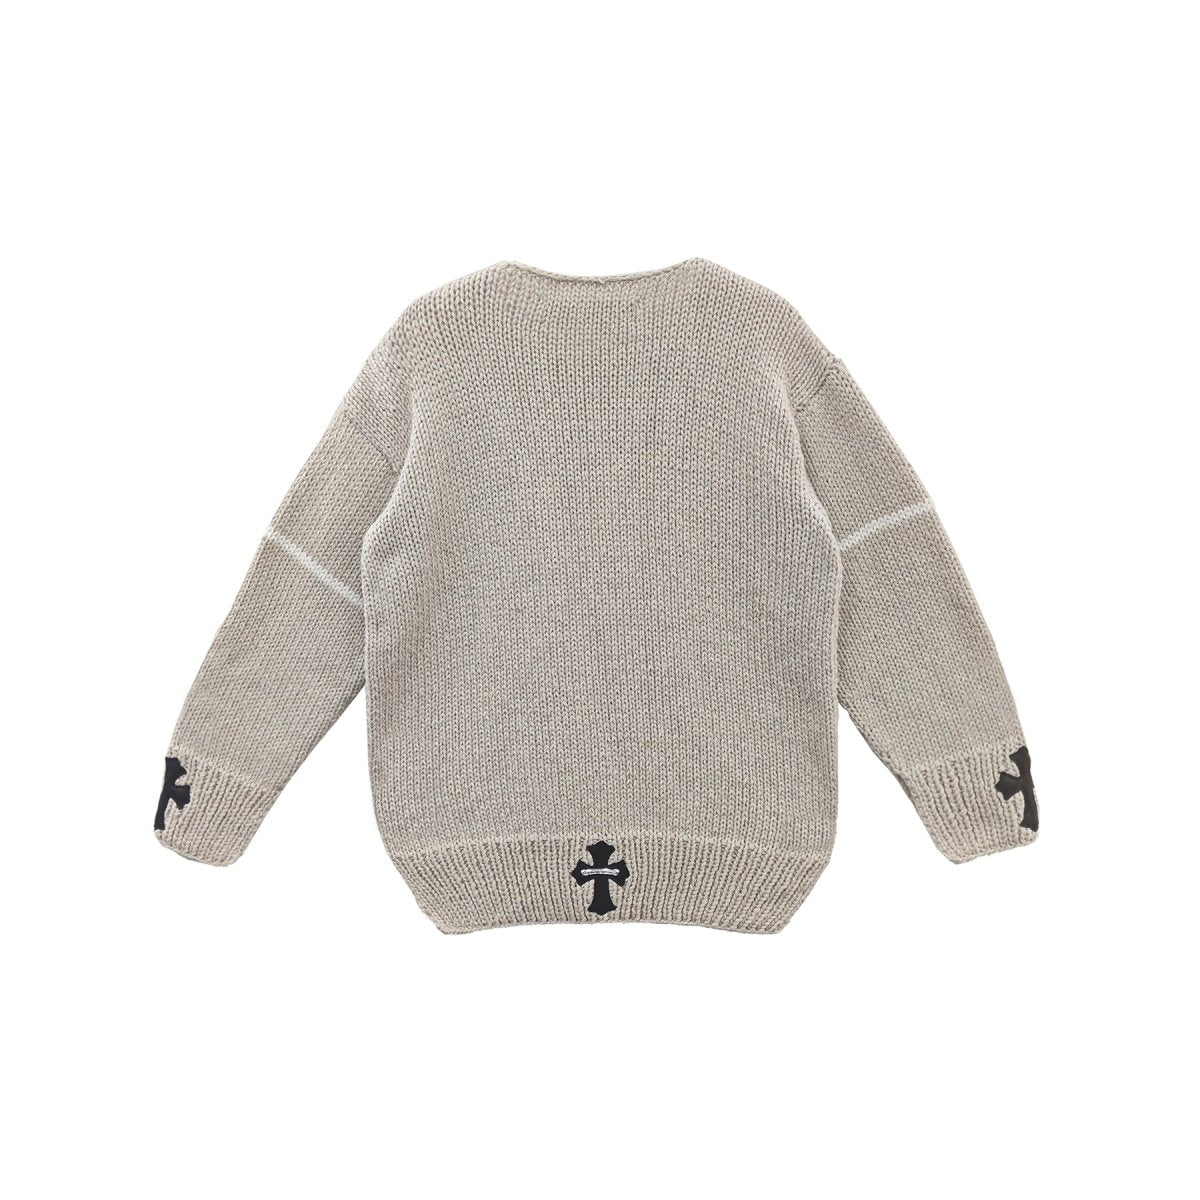 Chrome Hearts Black Leather Cross Patch Cashmere Sweater - SHENGLI ROAD MARKET